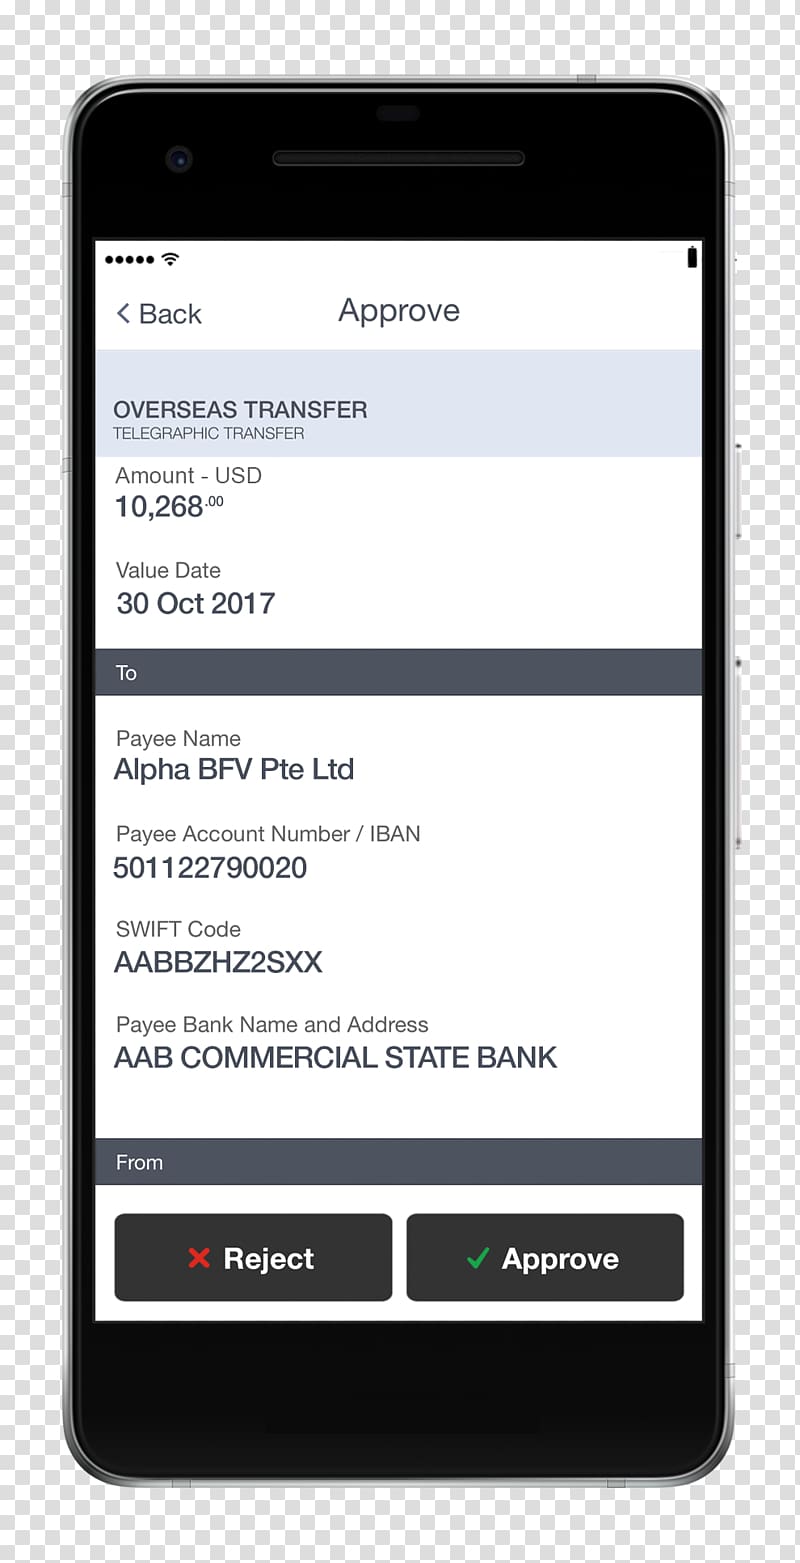 Ocbc Bank Responsive Web Design Business Transaction Account Transparent Background Png Clipart Hiclipart